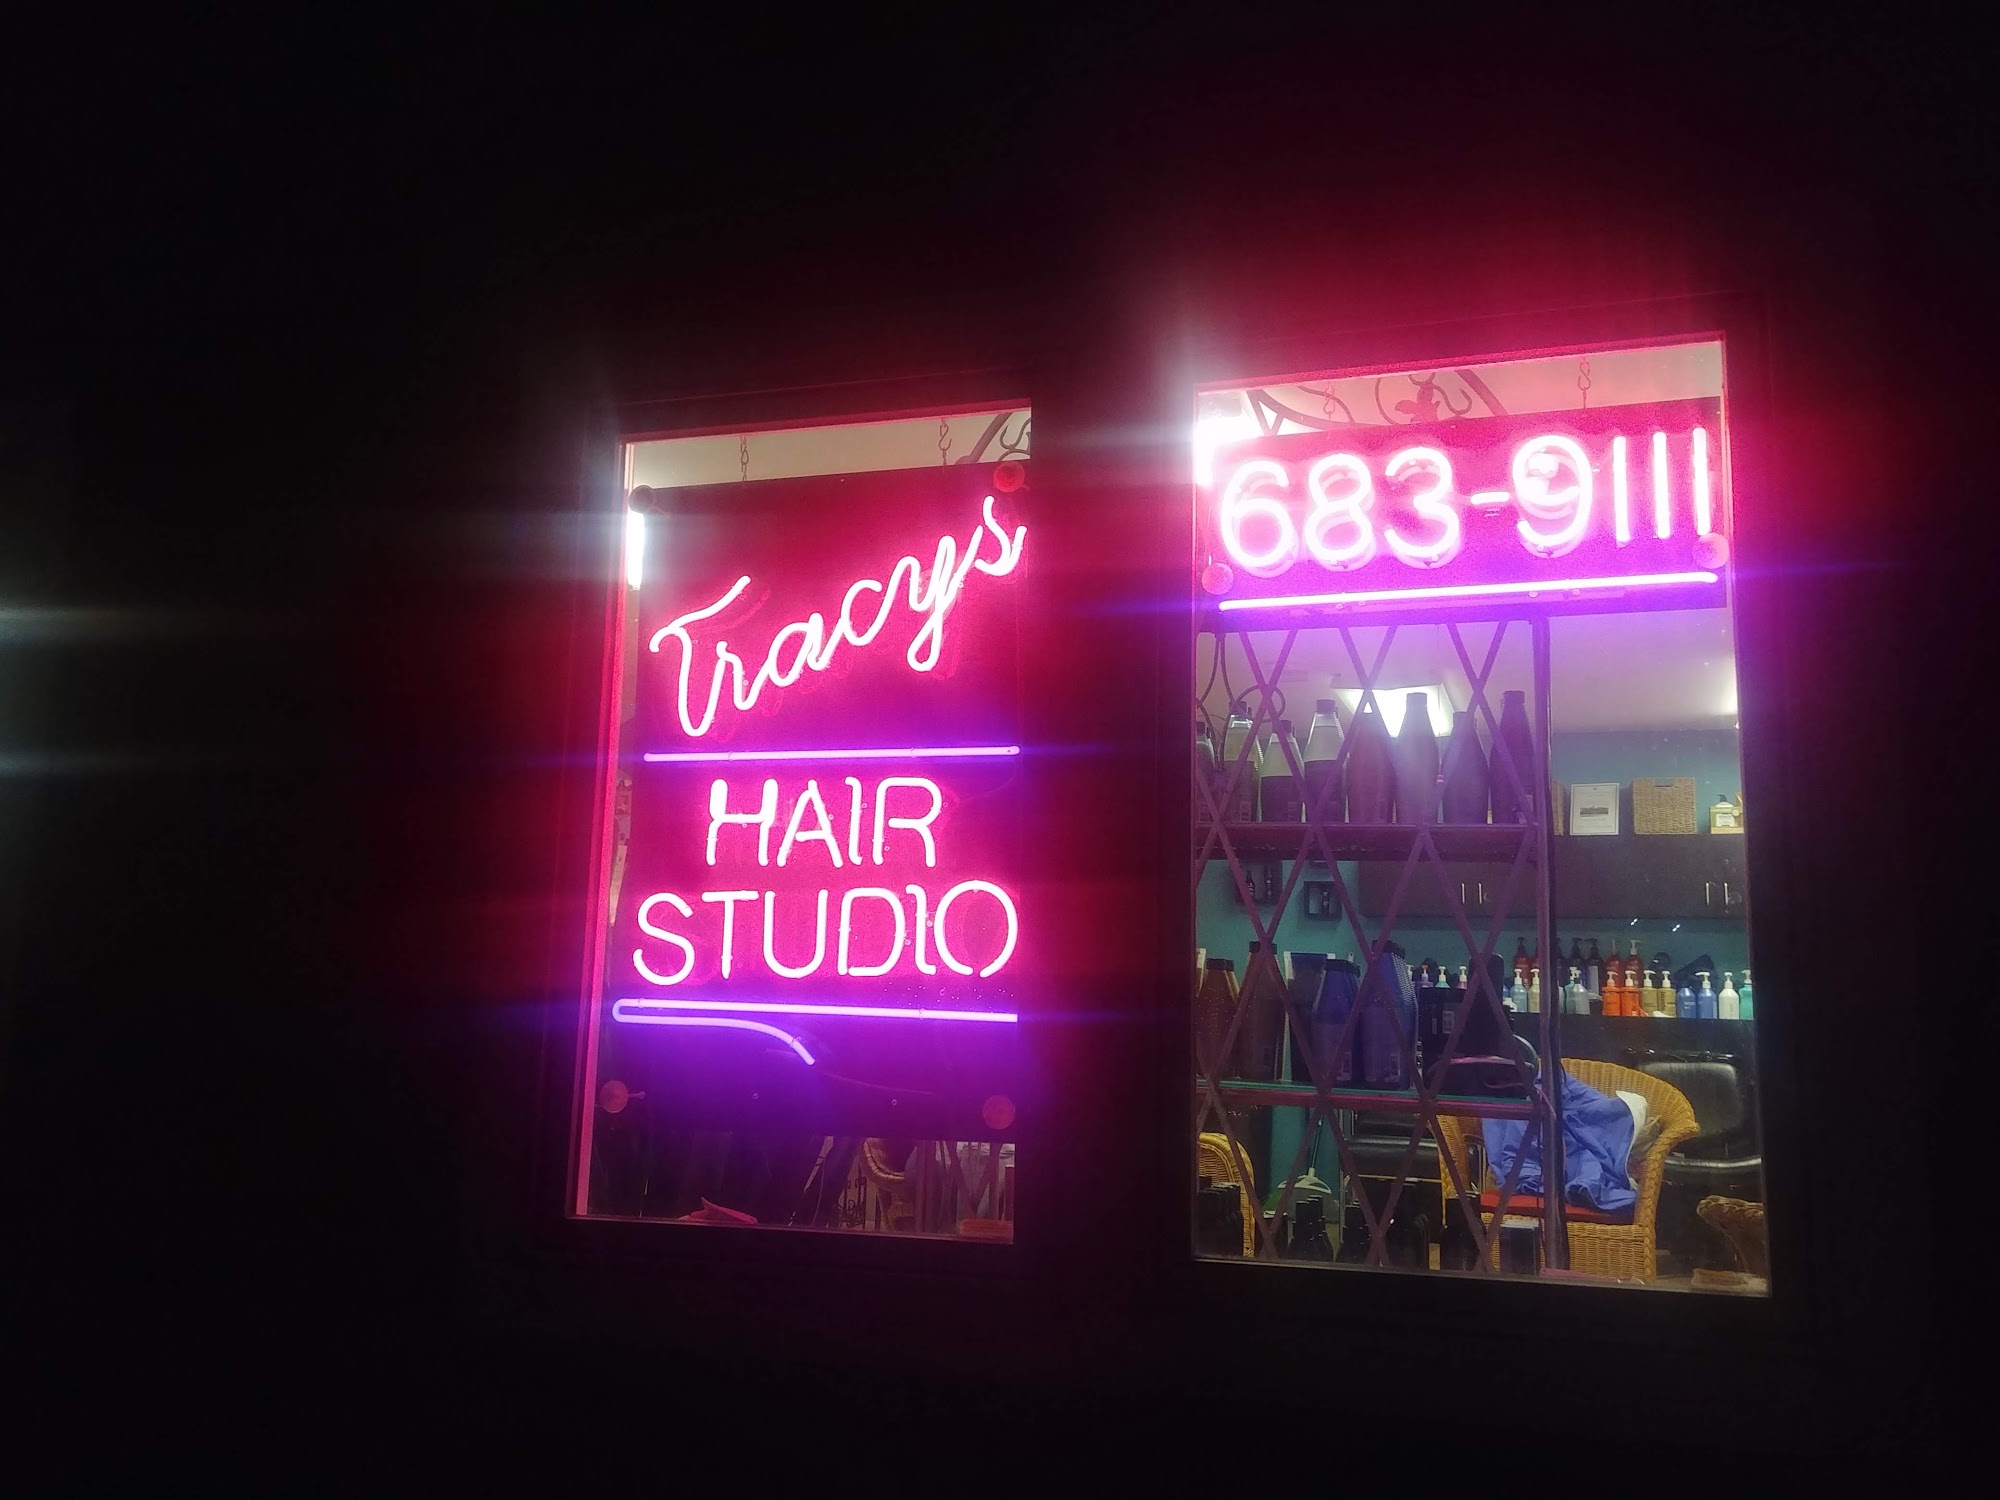 Tracy's Hair Studio